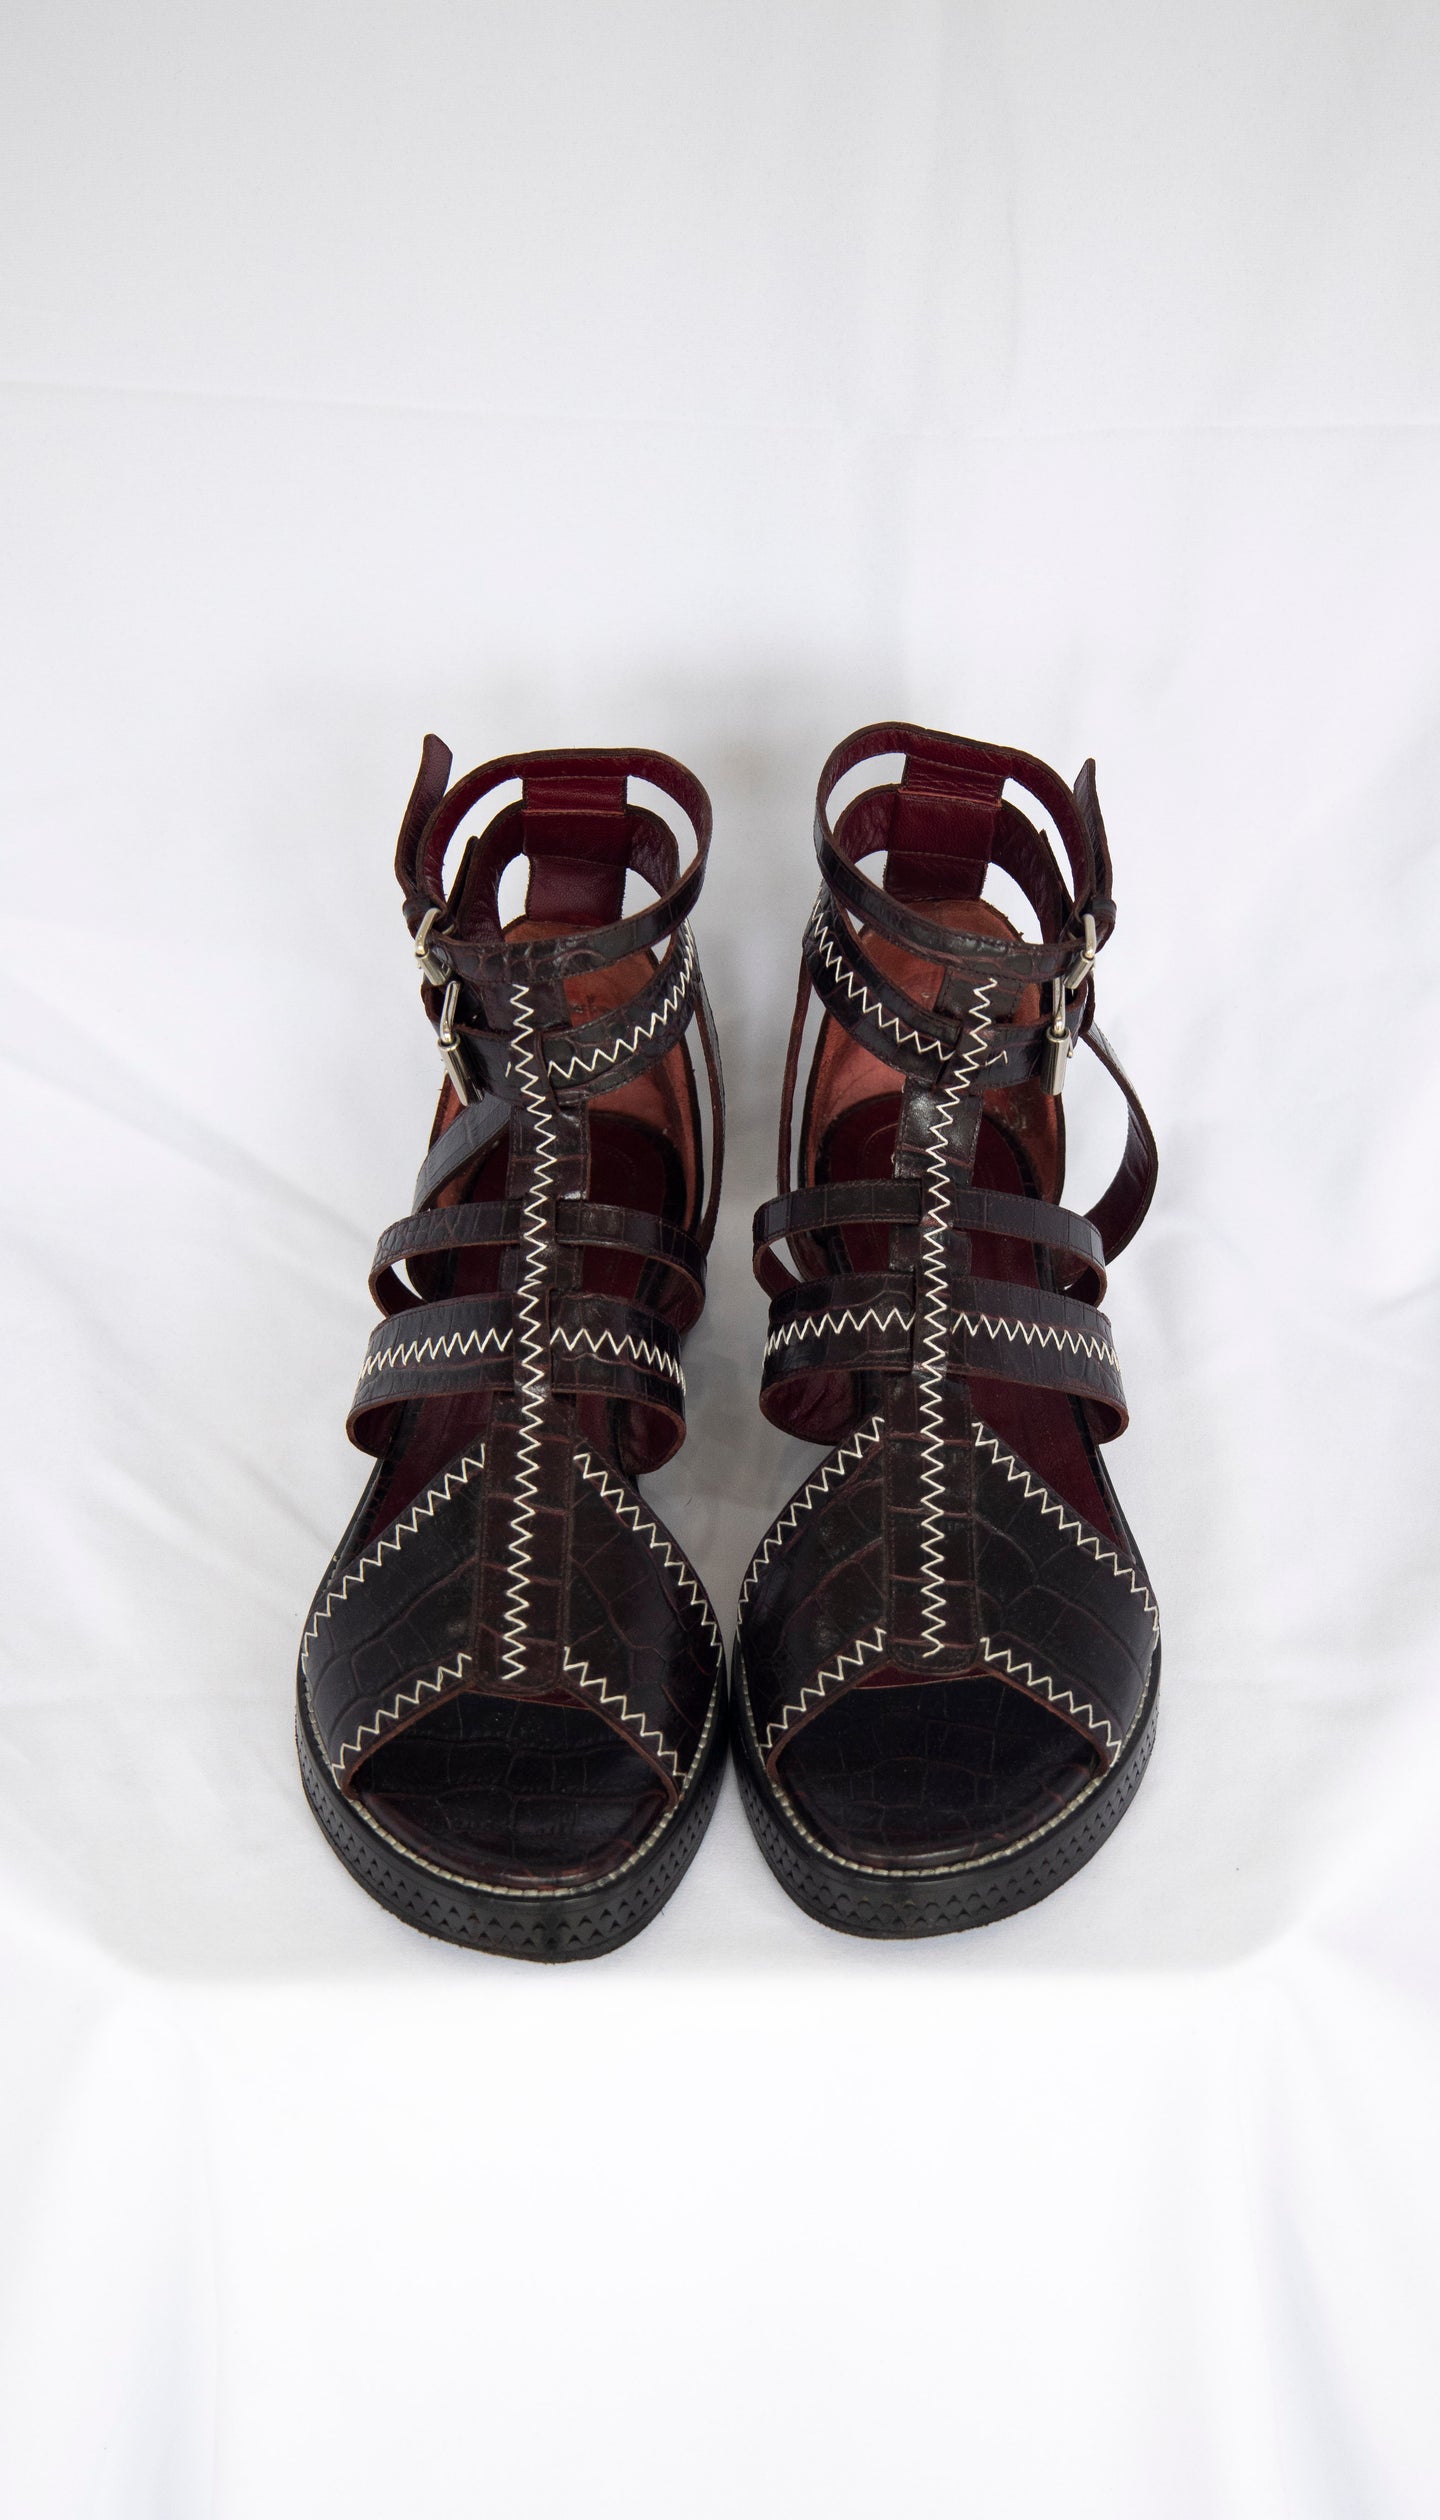 Ellery Gladiator Style Sandal